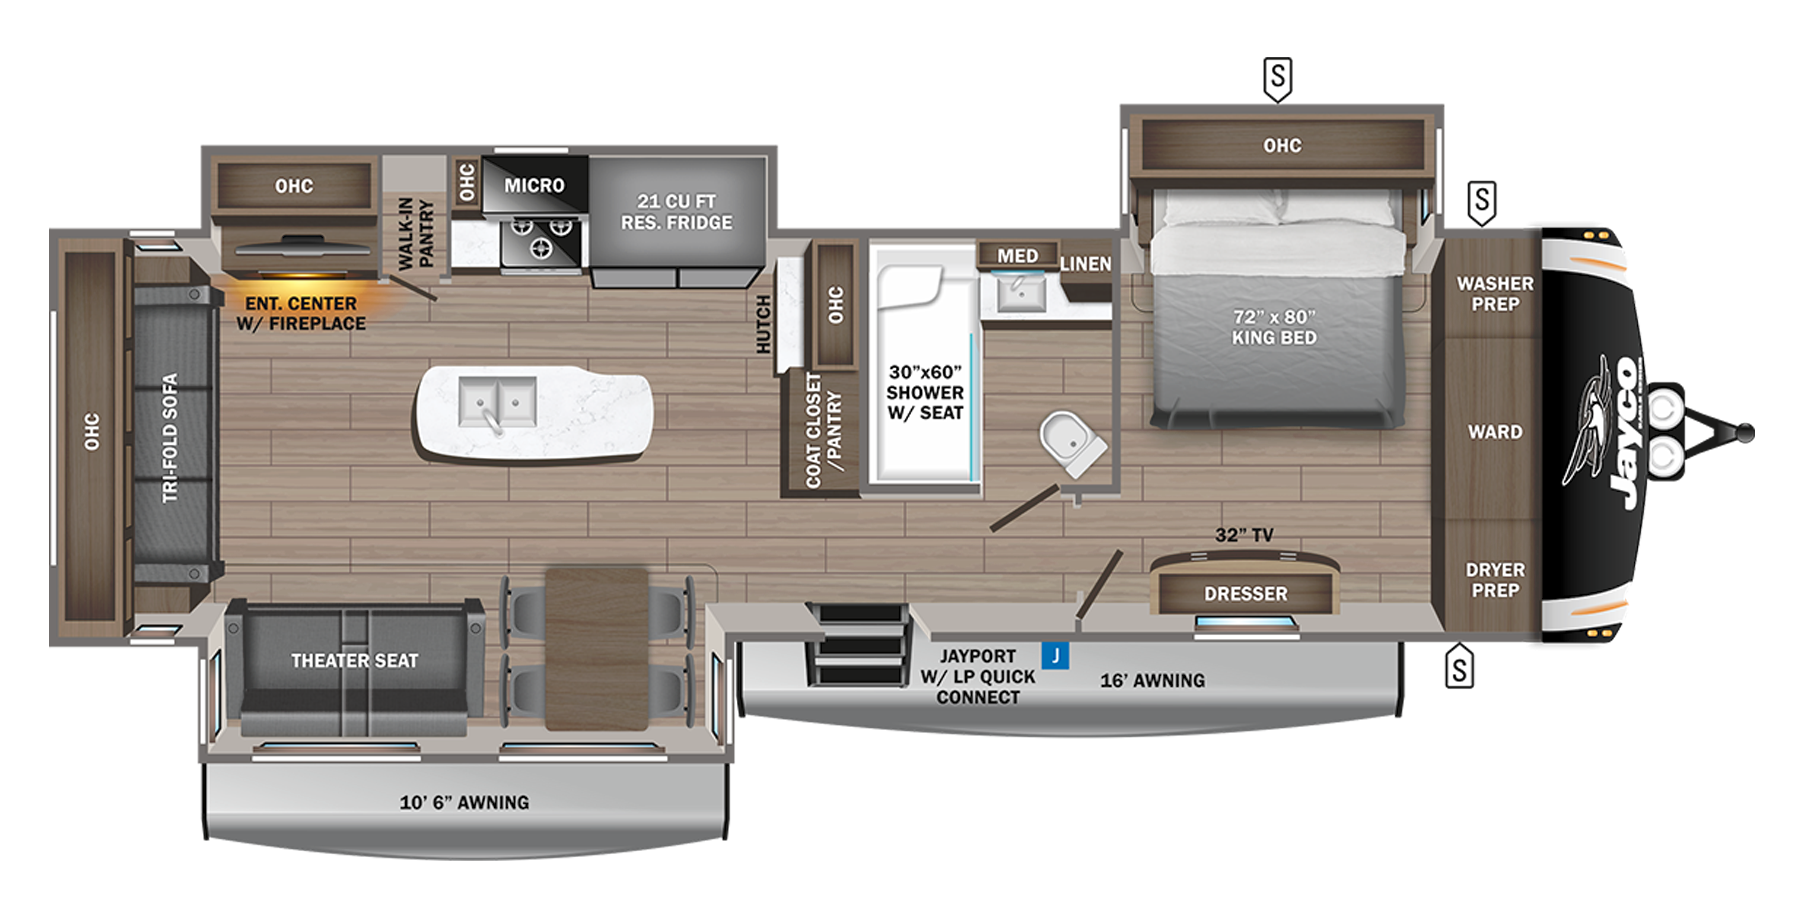 Jayco Eagle 330RSTS travel trailer floor plan diagram.